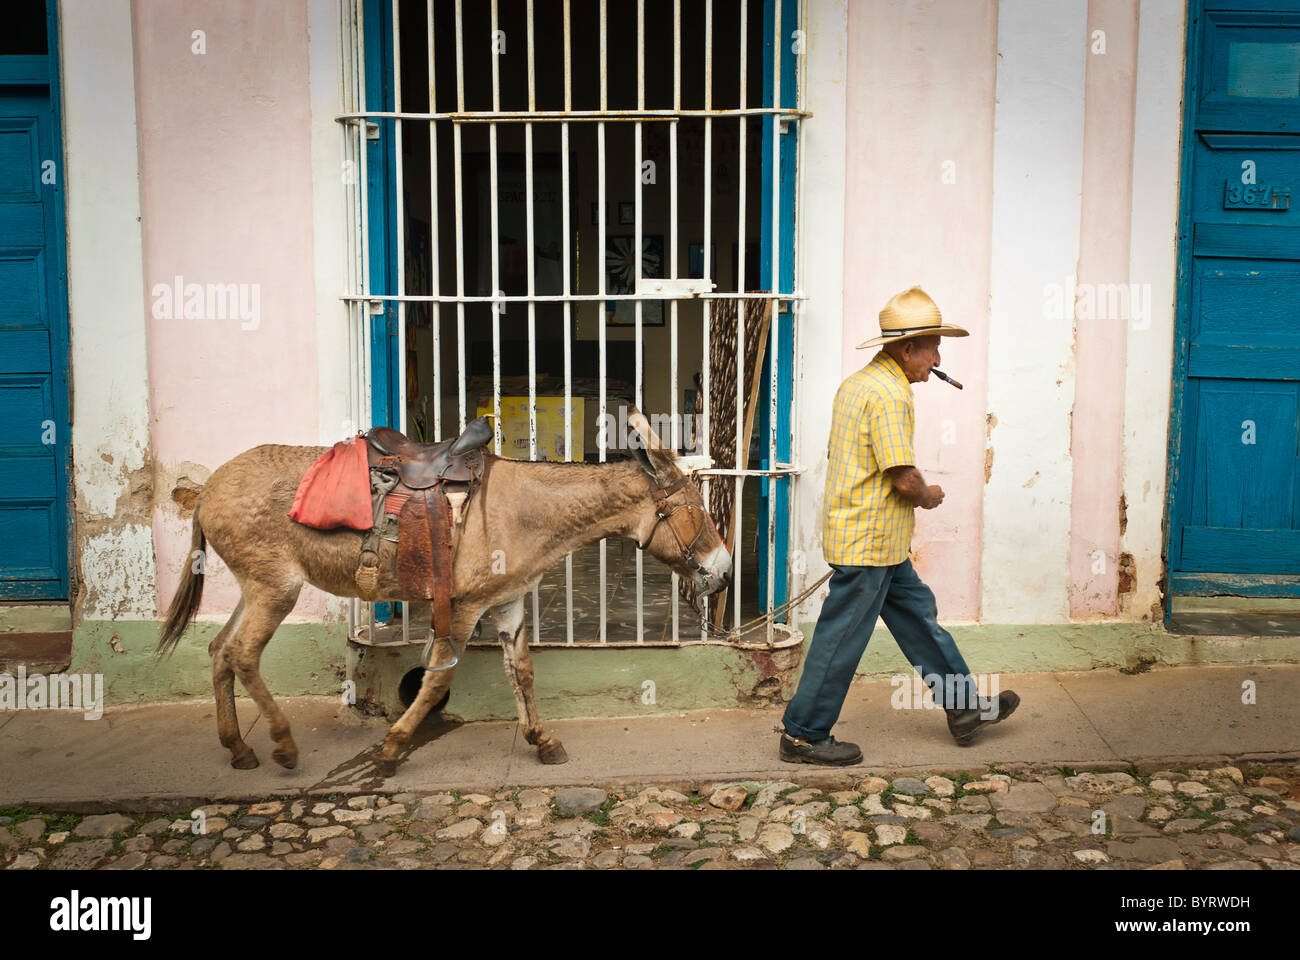 Old man with straw hat walking with his donkey , Trinidad, Sancti Spiritus, Cuba, Caribbean. Stock Photo